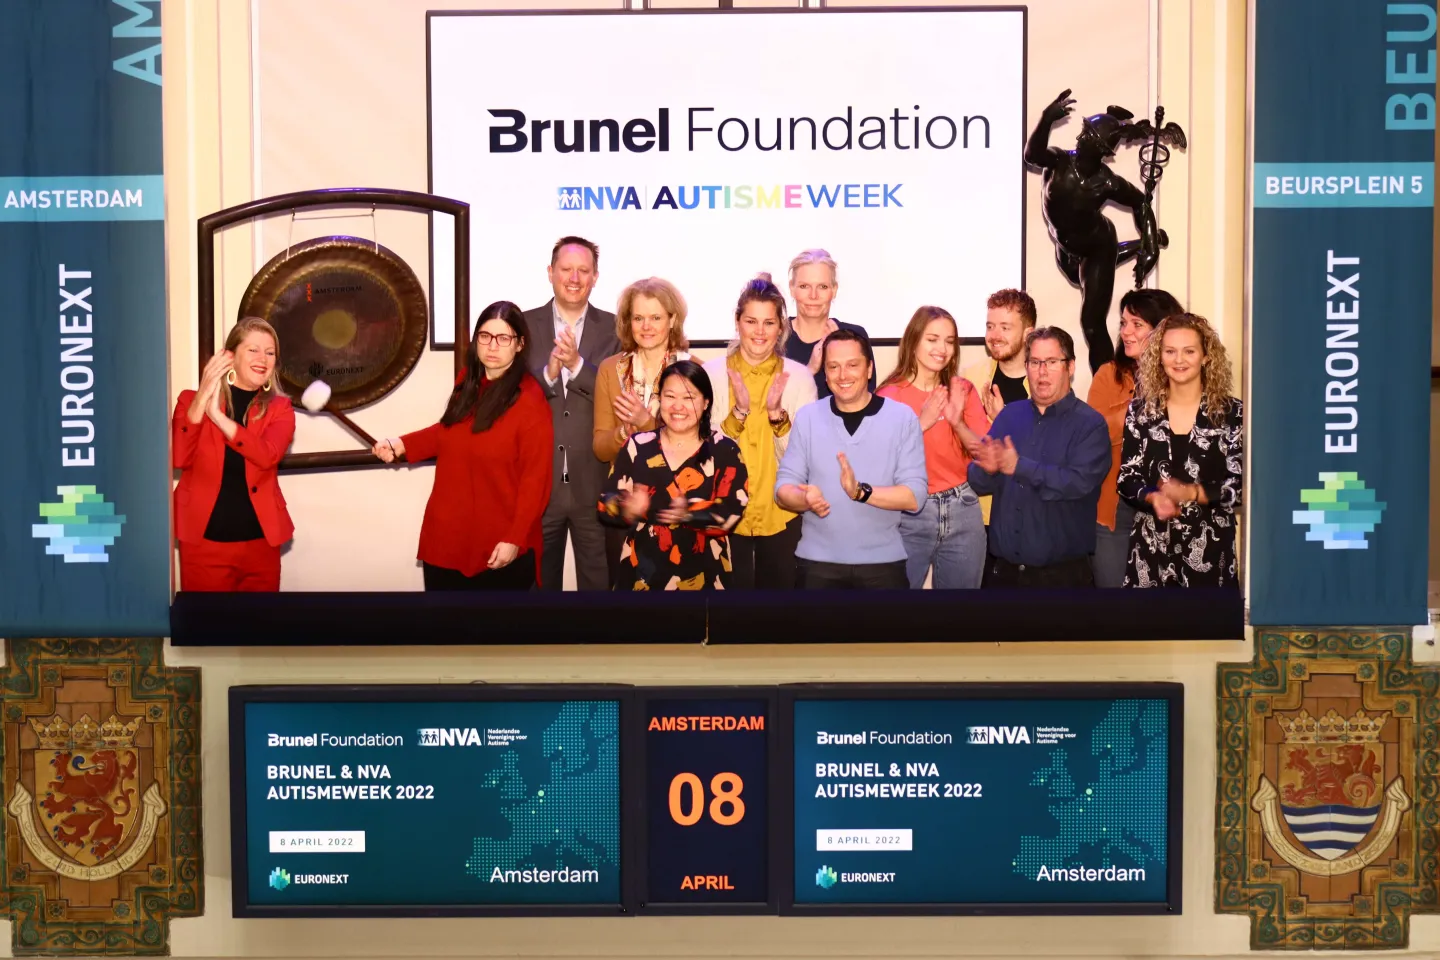 Brunel & NVA Autismeweek 